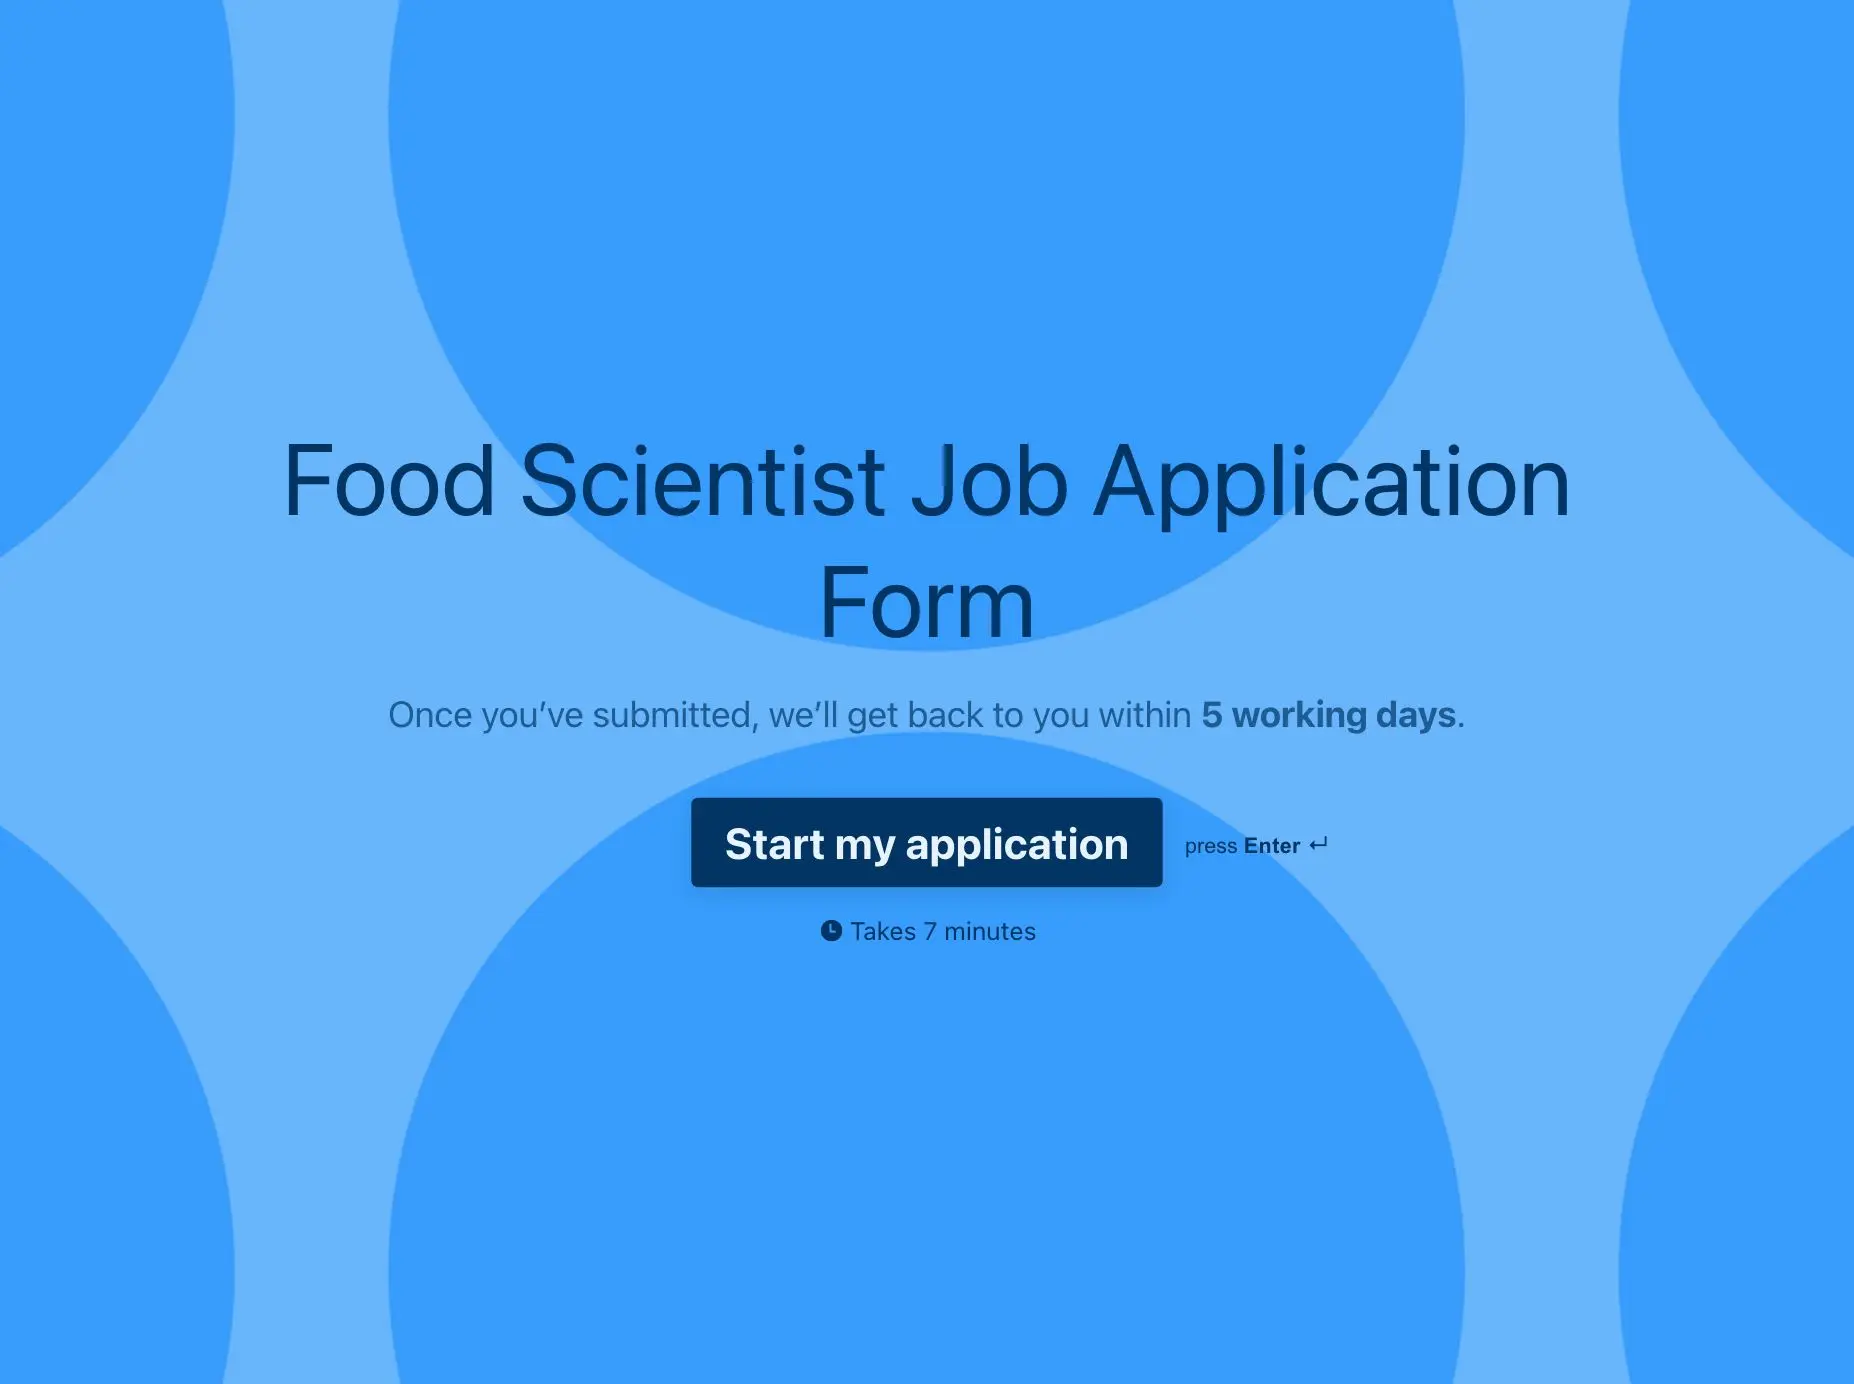 Food Scientist Job Application Form Template Hero